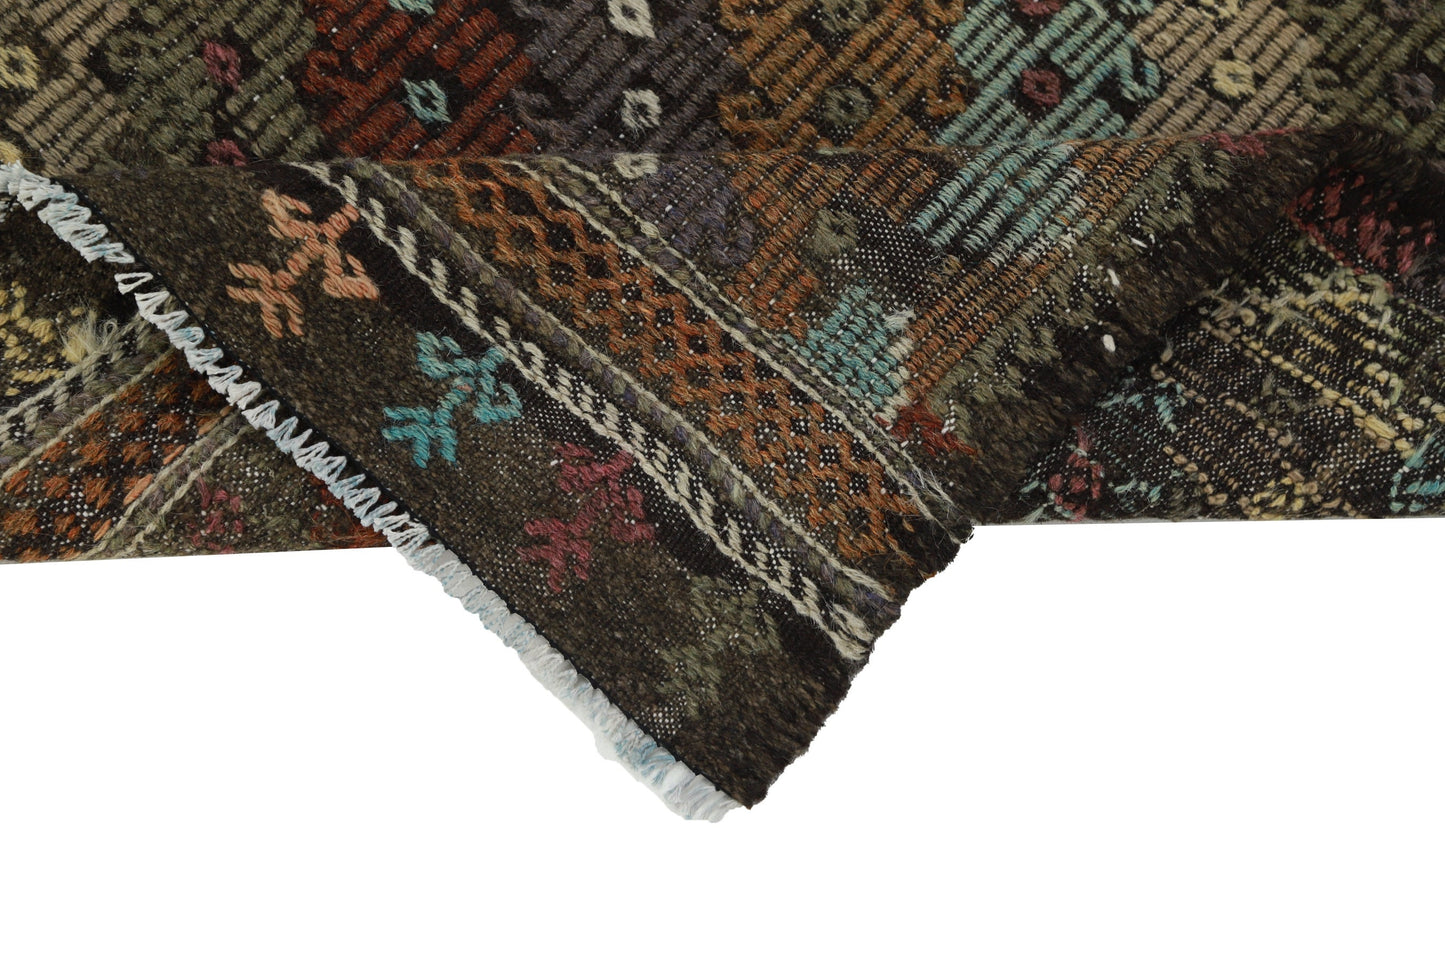 Kilim rug Terracotta, Turkish Kilim rug Eclectic ,One of a kind Vintage Kilim Rug ,Handmade Kilim Rug, Area Rug 7x9, KiLİM RUG 7x9, 8179